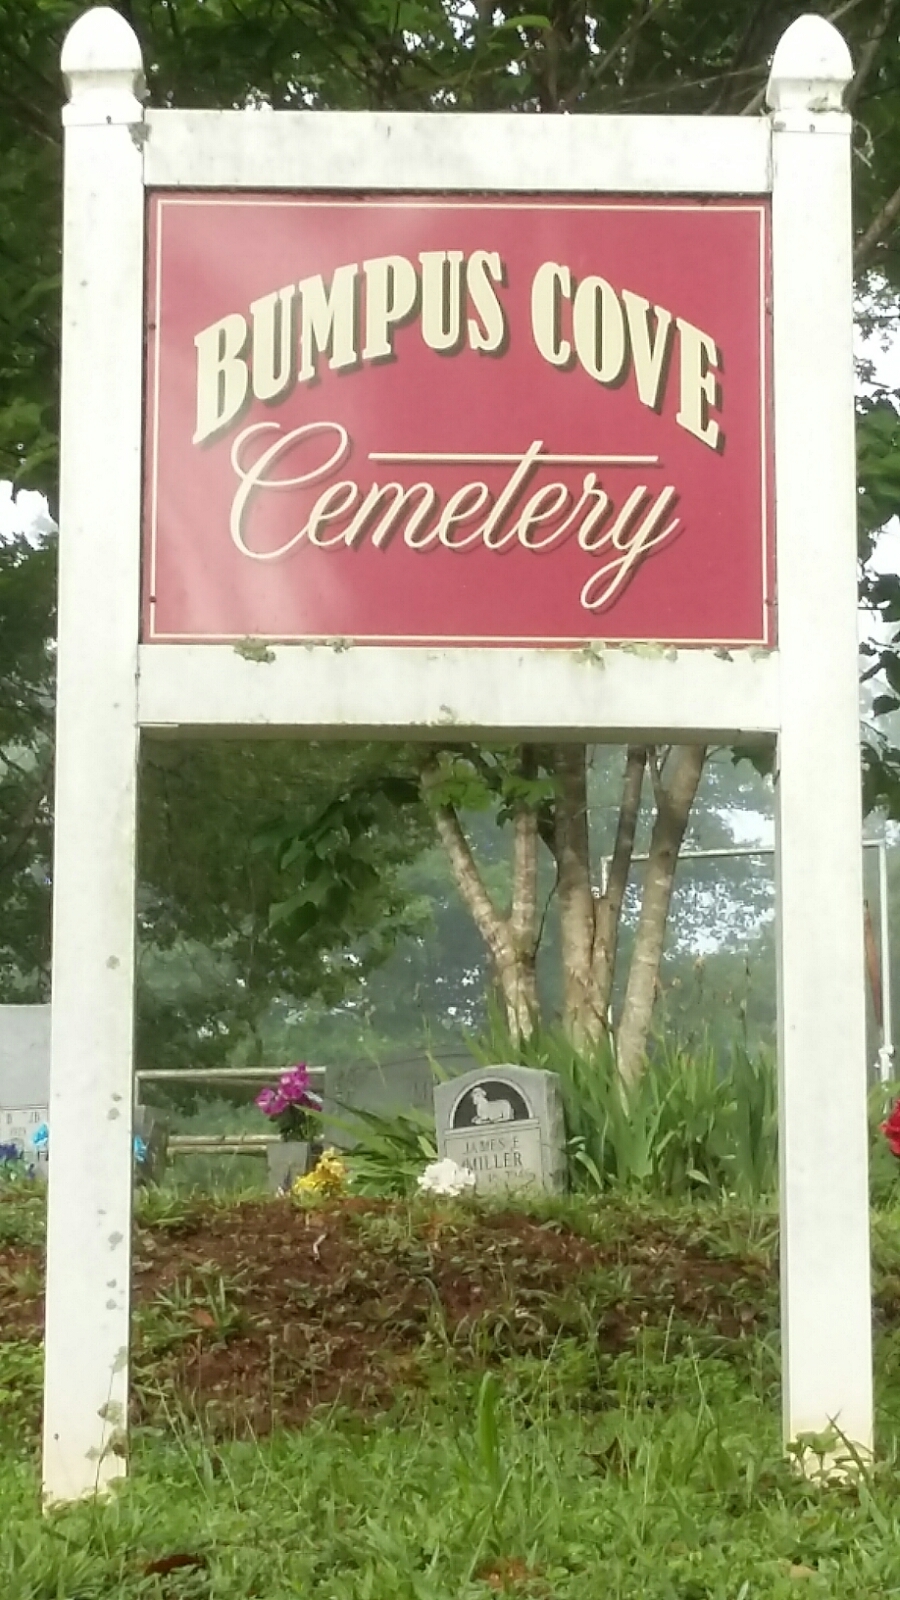 Bumpus Cove Cemetery